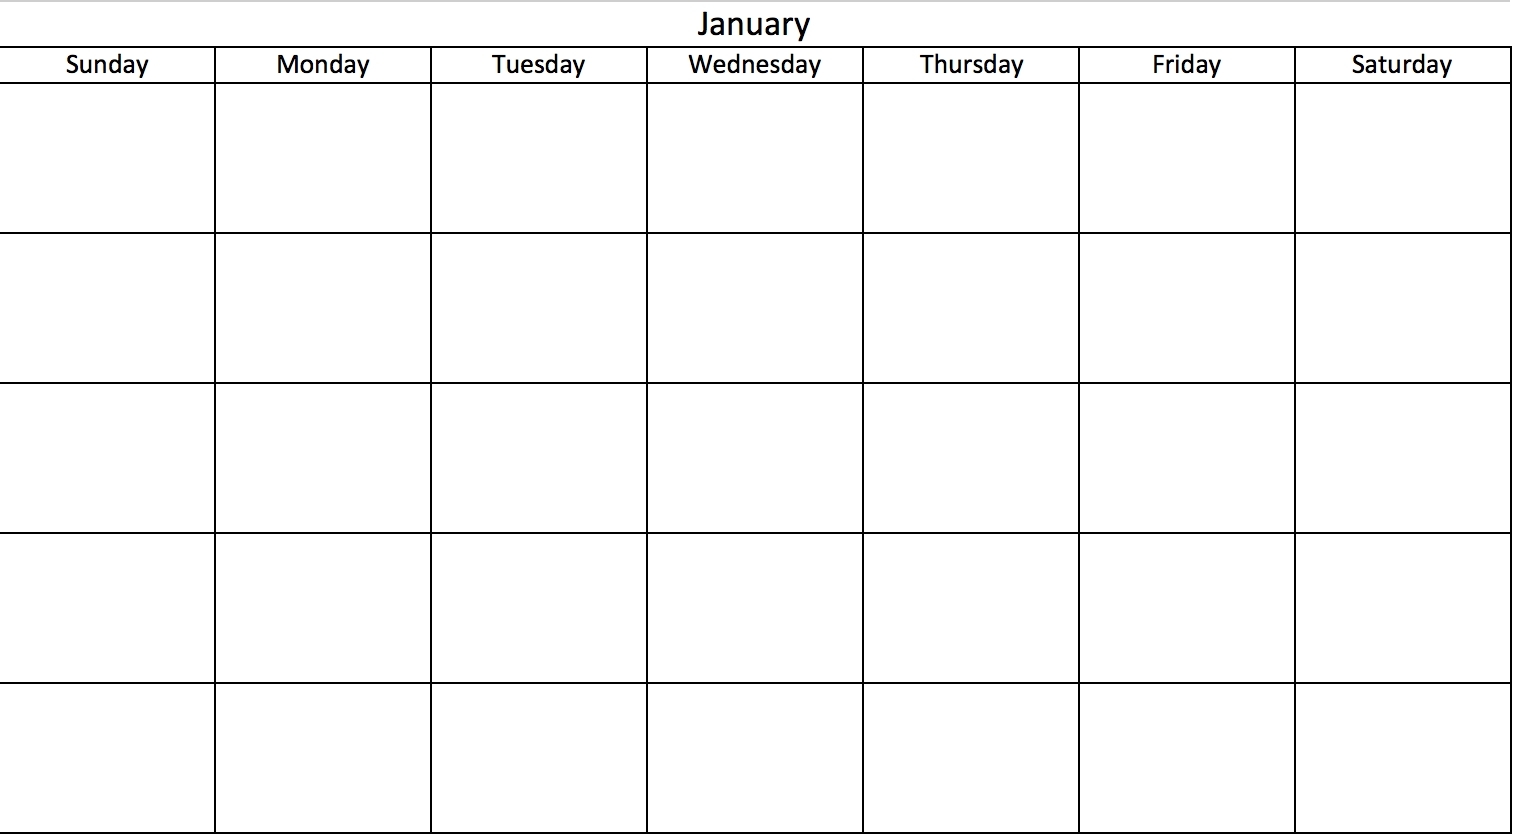 Schedule Template Weekday Calendar Printable Week Day Only Holidays Blank Calendar Weekdays Only